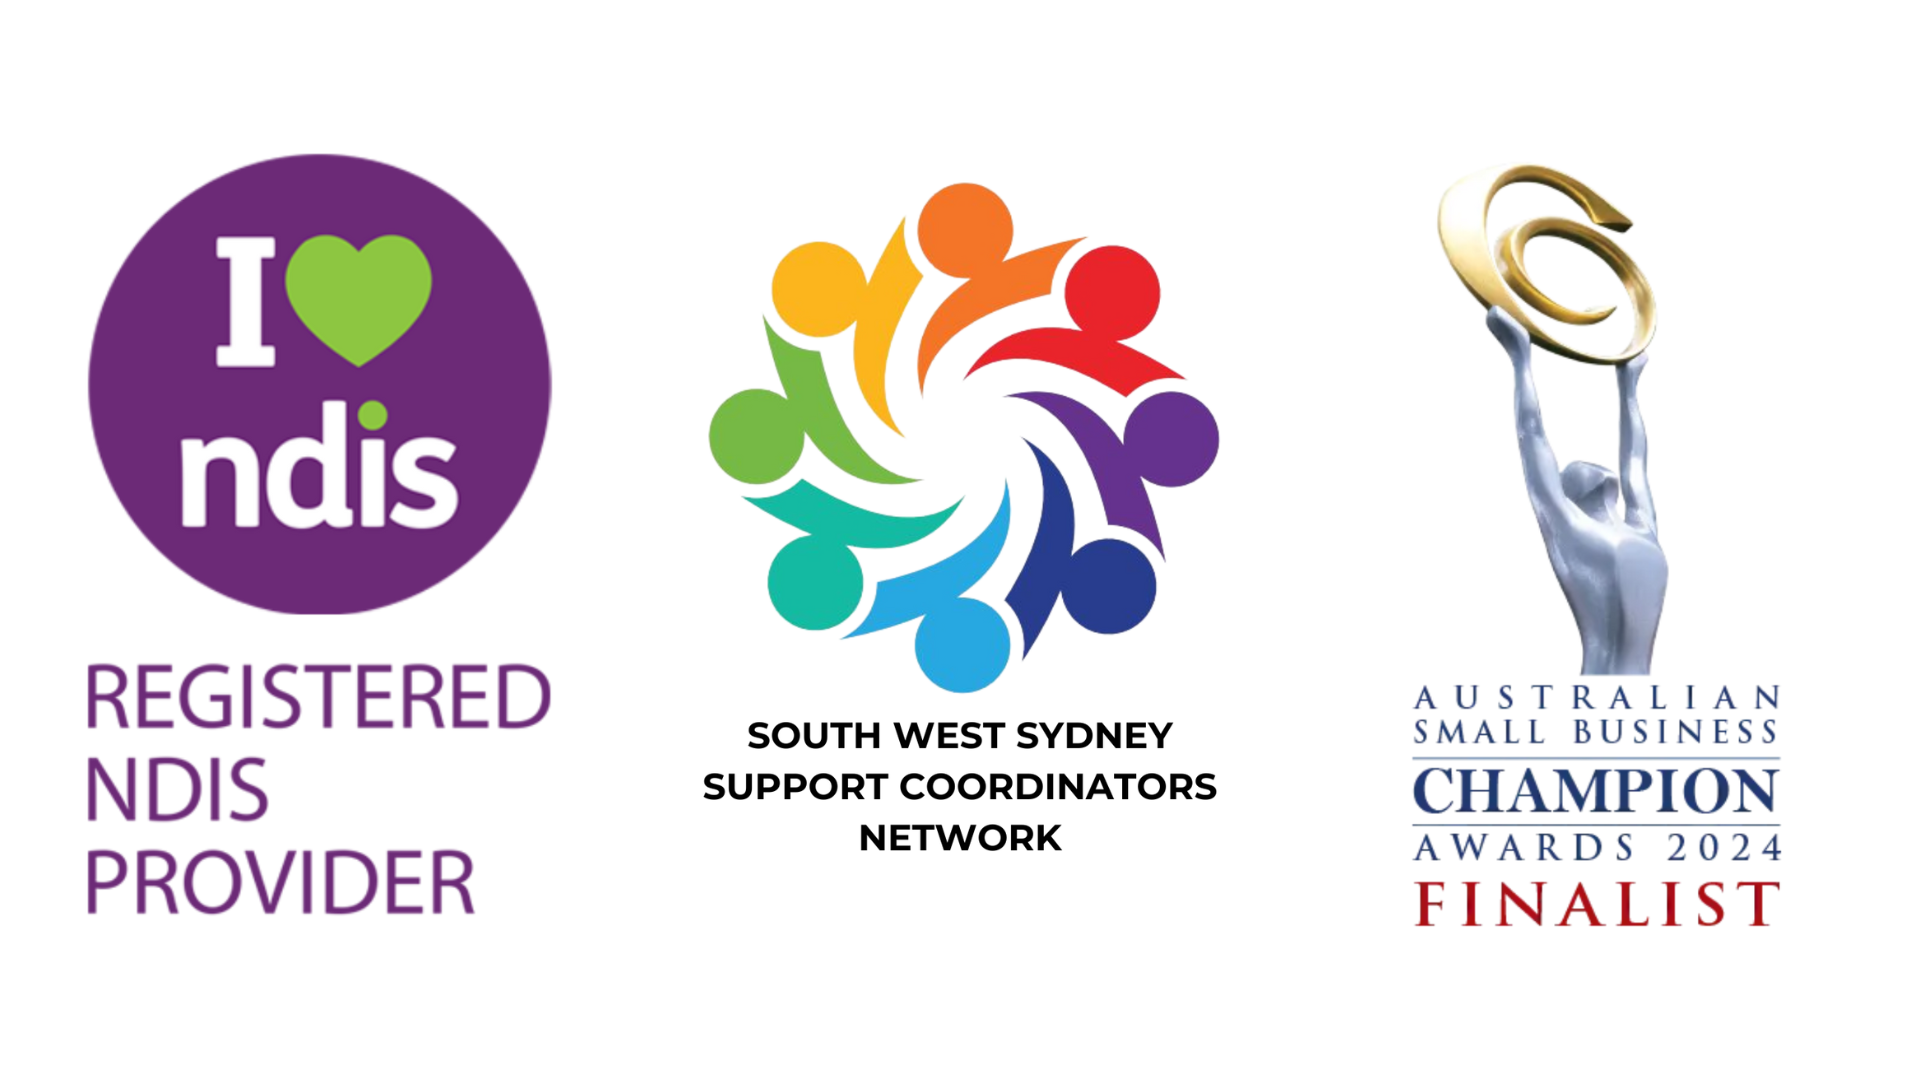 ndis-registered-provider-logo-colorful-community-symbol-australian-small-business-champion-awards-finalist